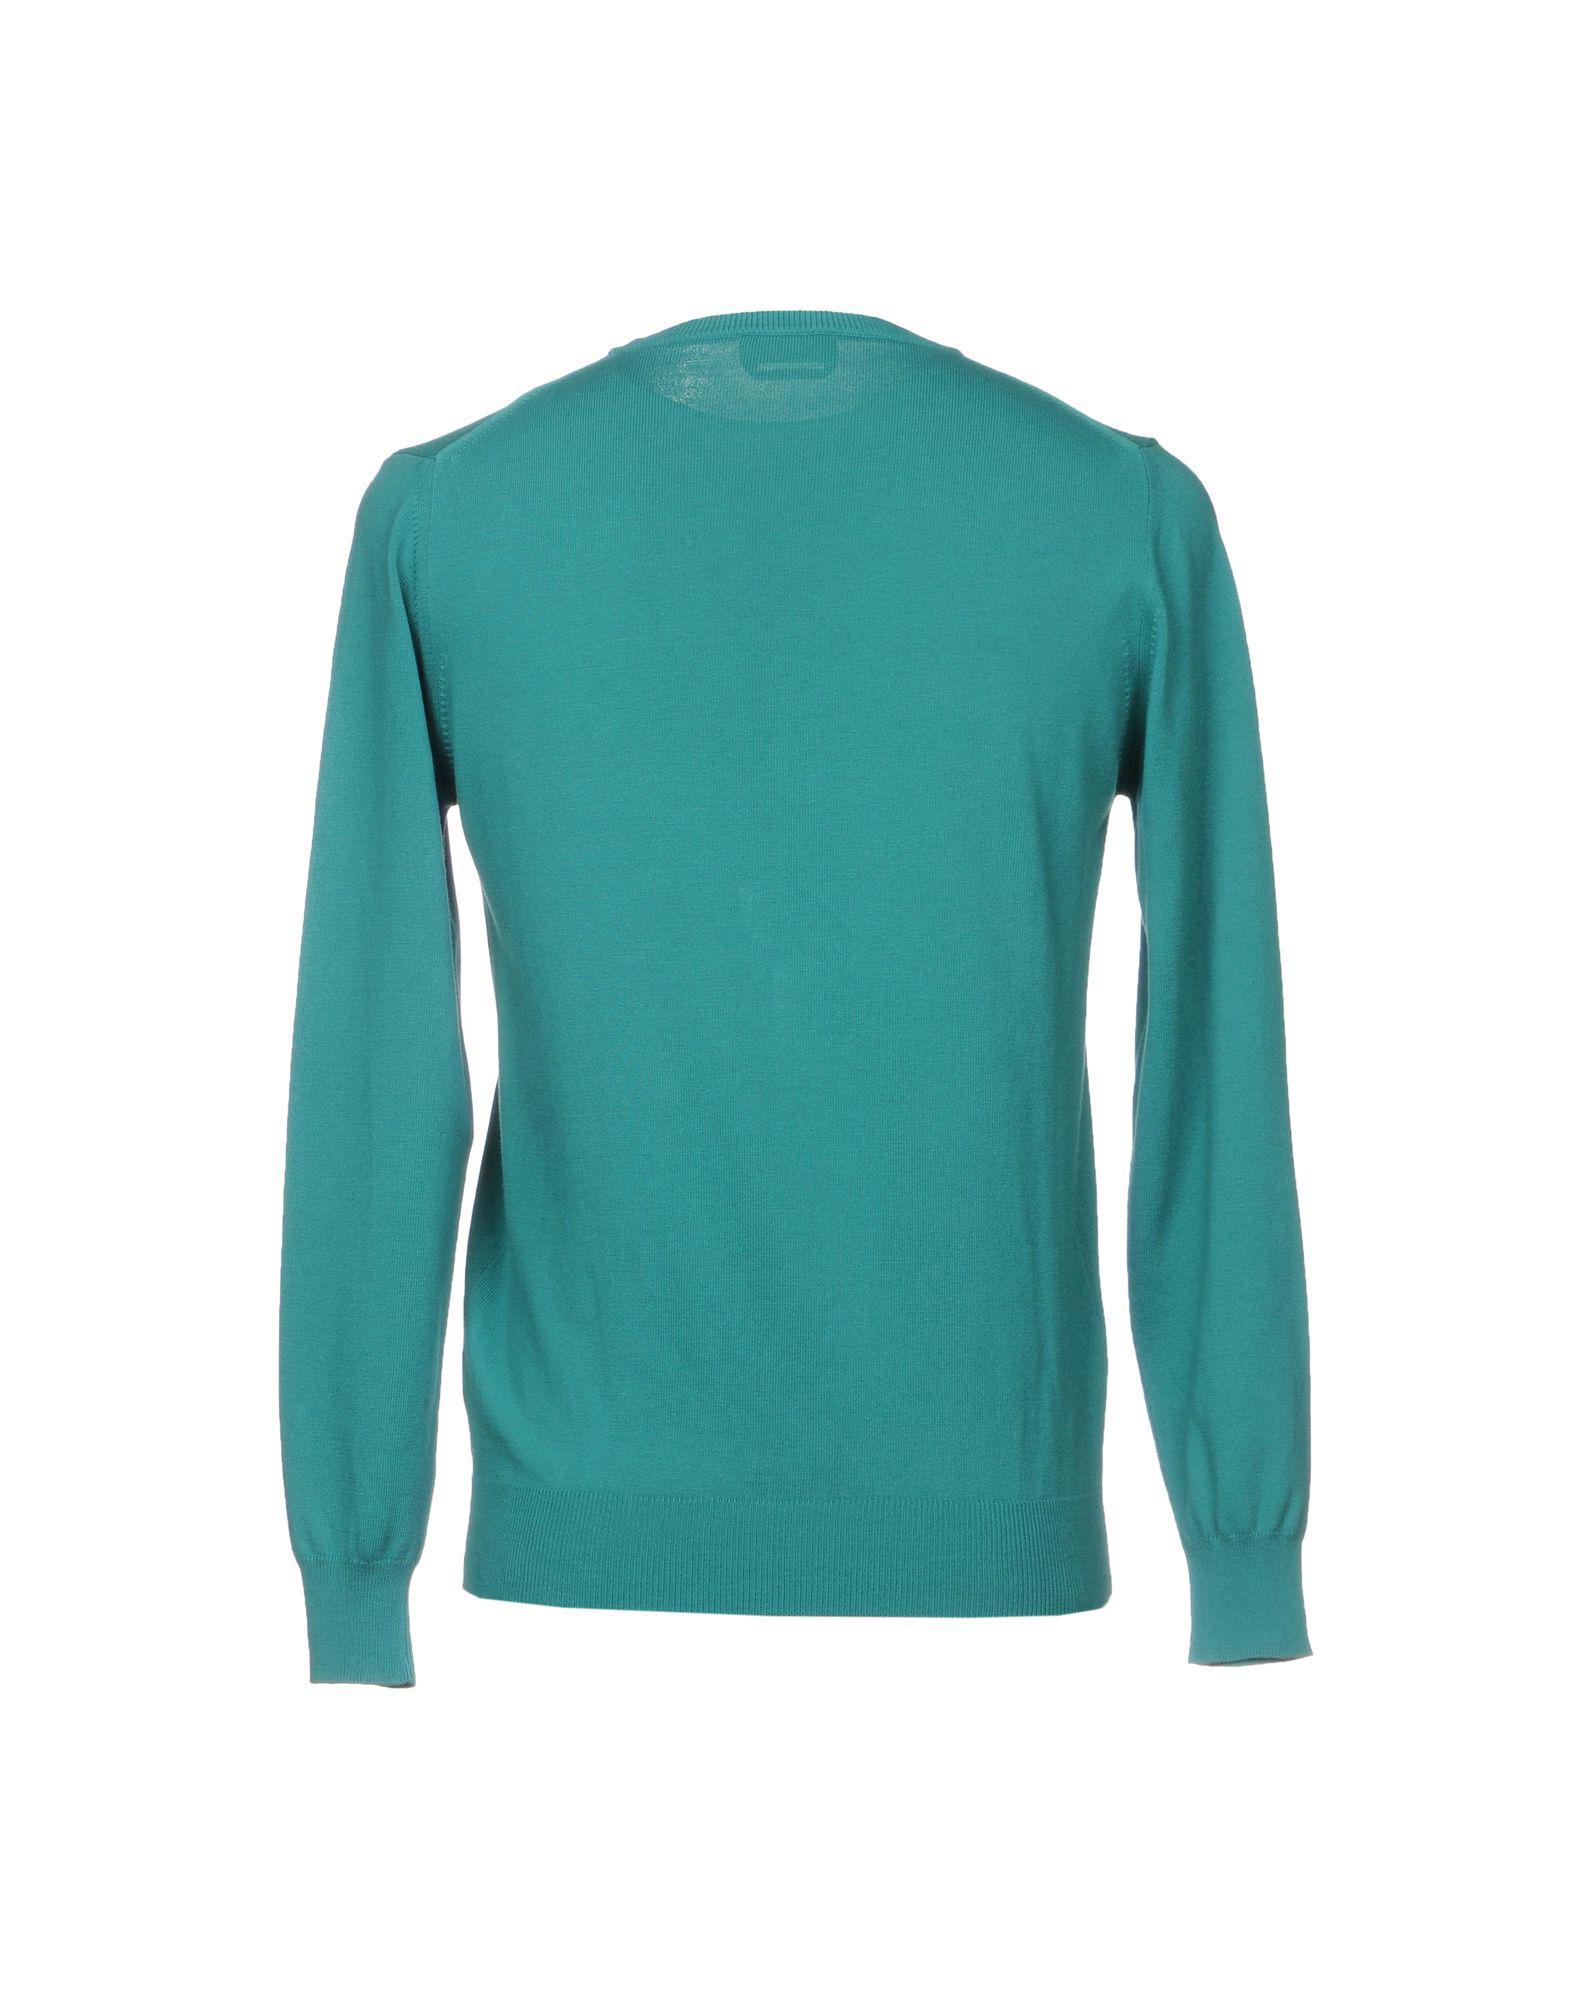 Brooksfield Cotton Sweater in Deep Jade (Green) for Men - Lyst